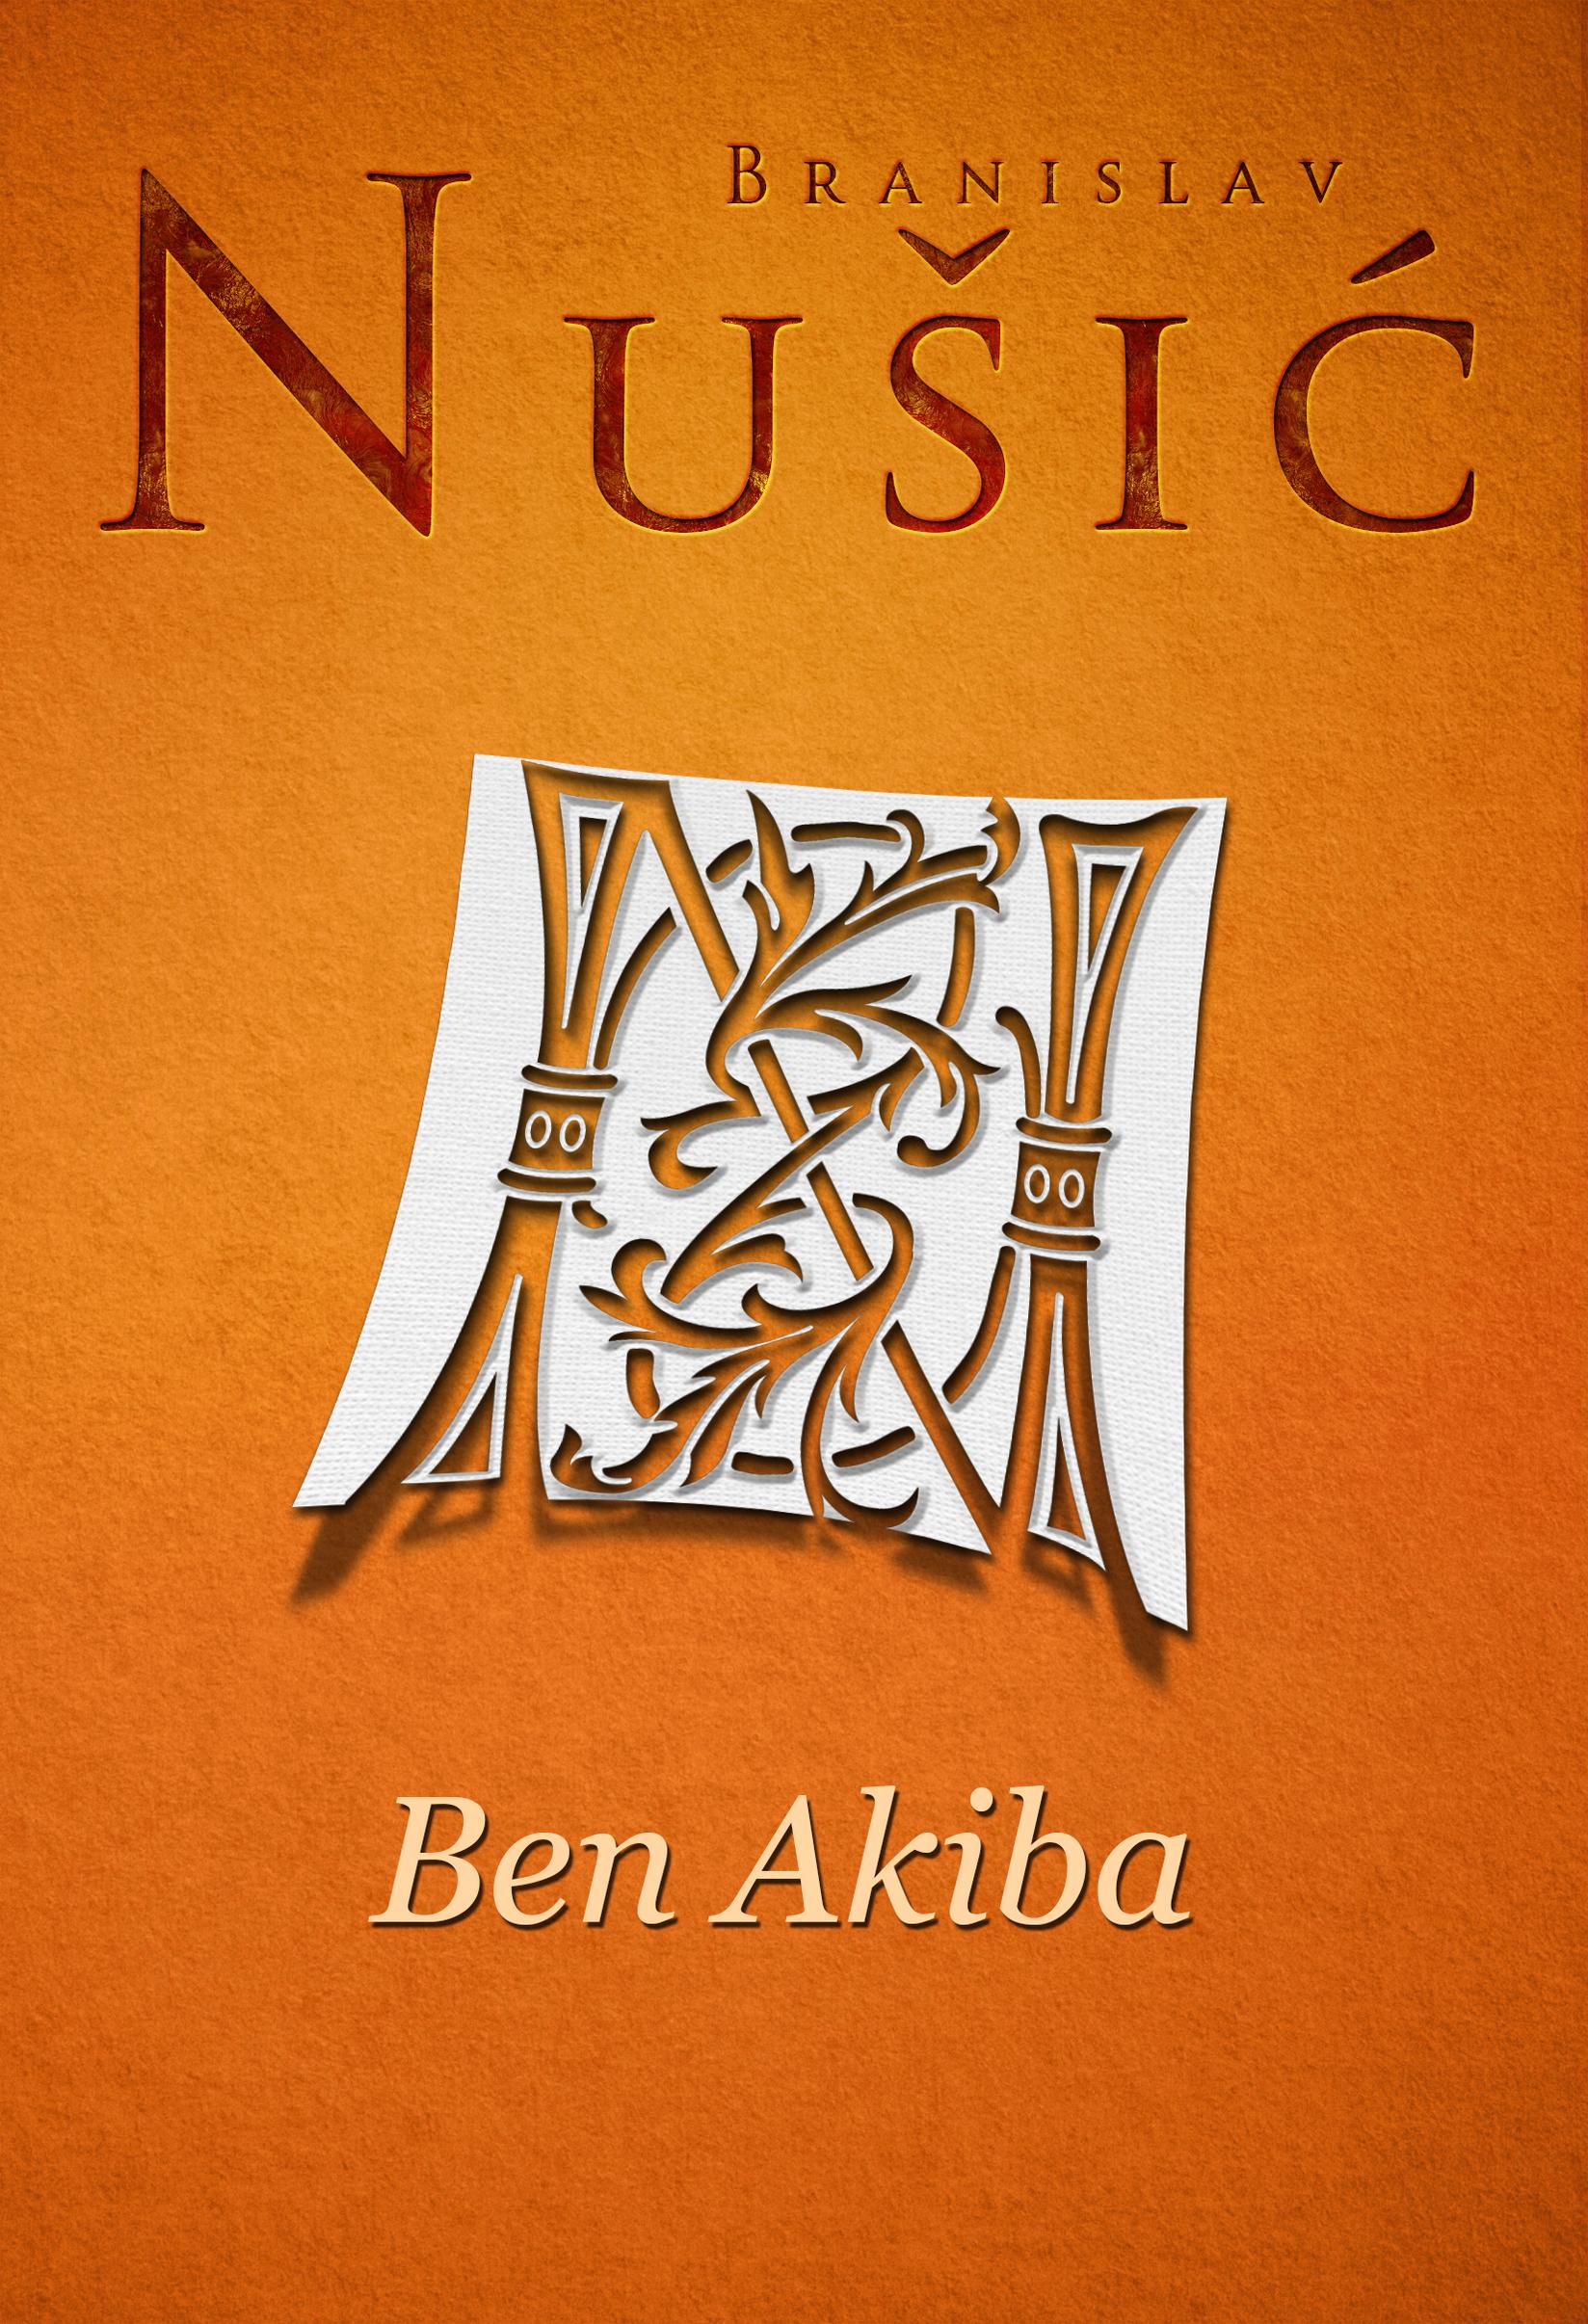 Selected image for Ben Akiba